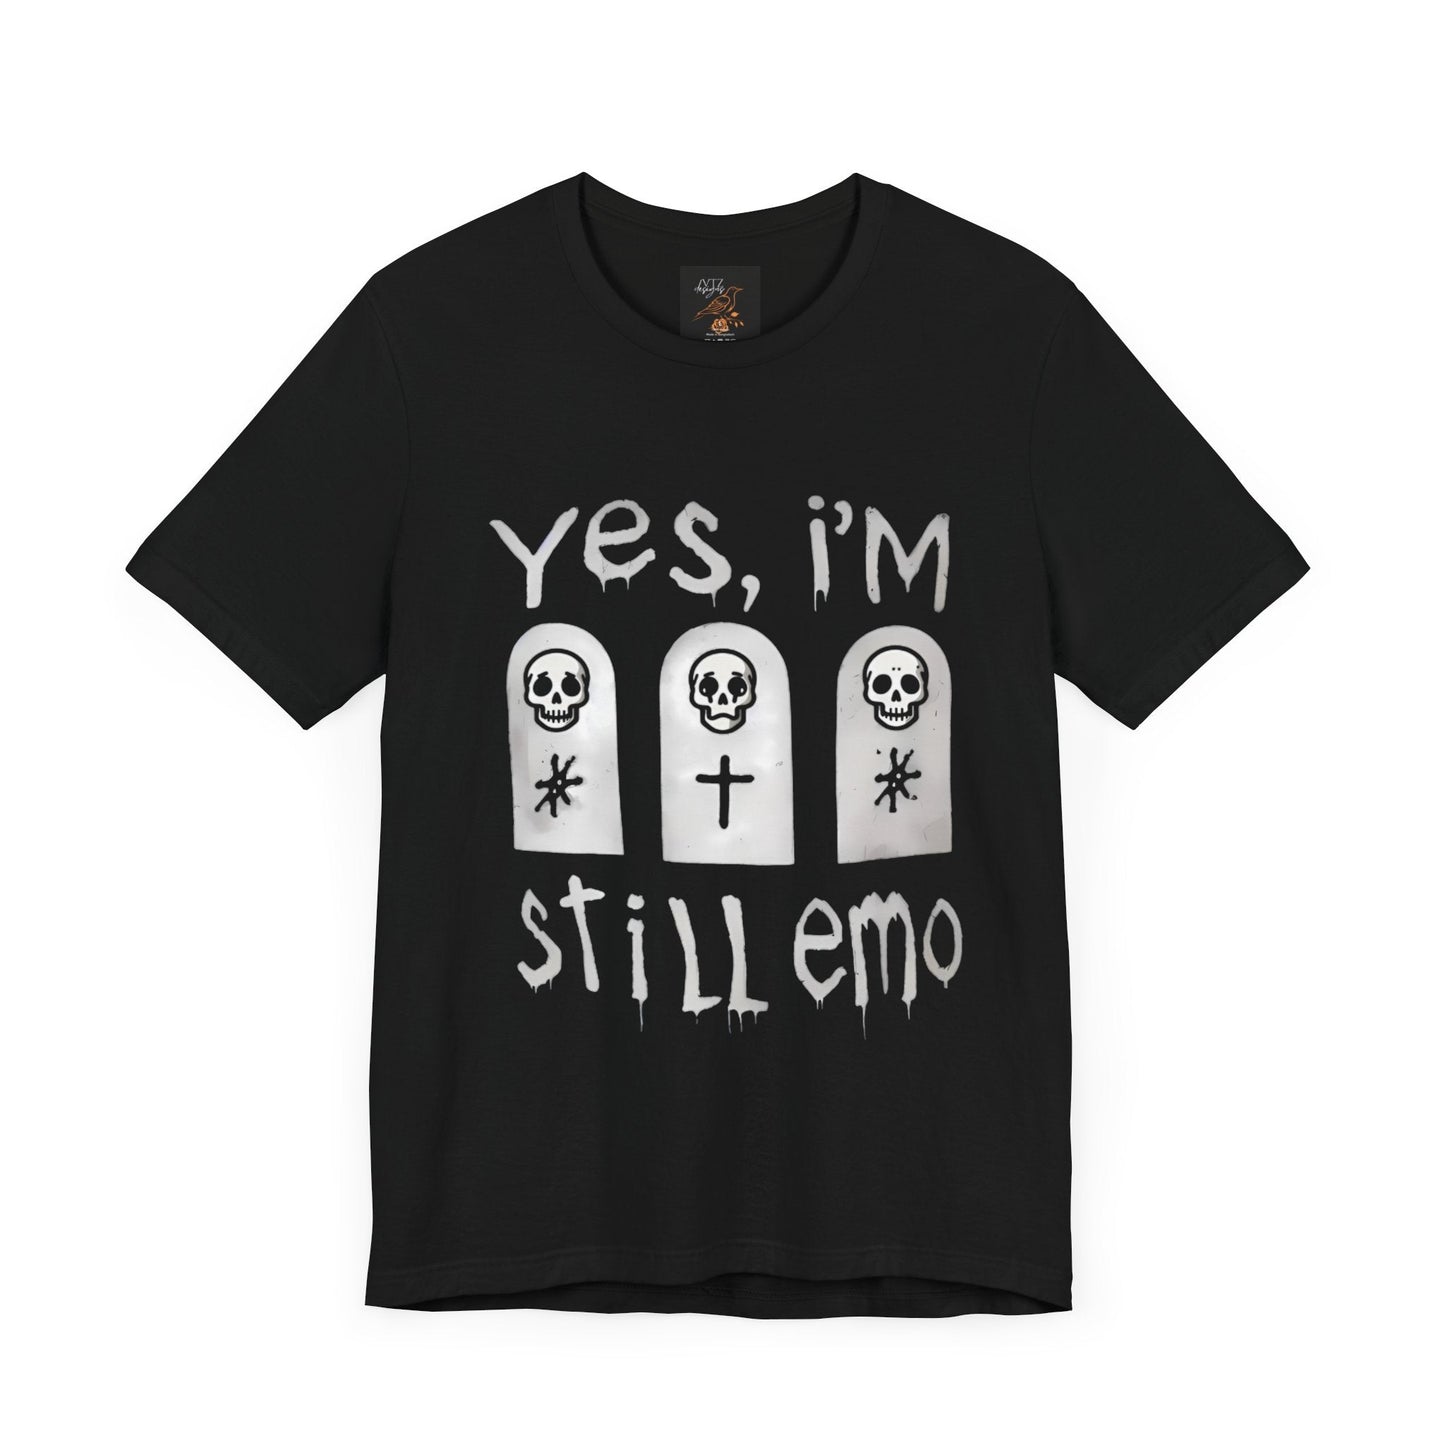 Yes I'm Still Emo Tee ShirtT - ShirtVTZdesignsBlackXSclothesclothingCotton